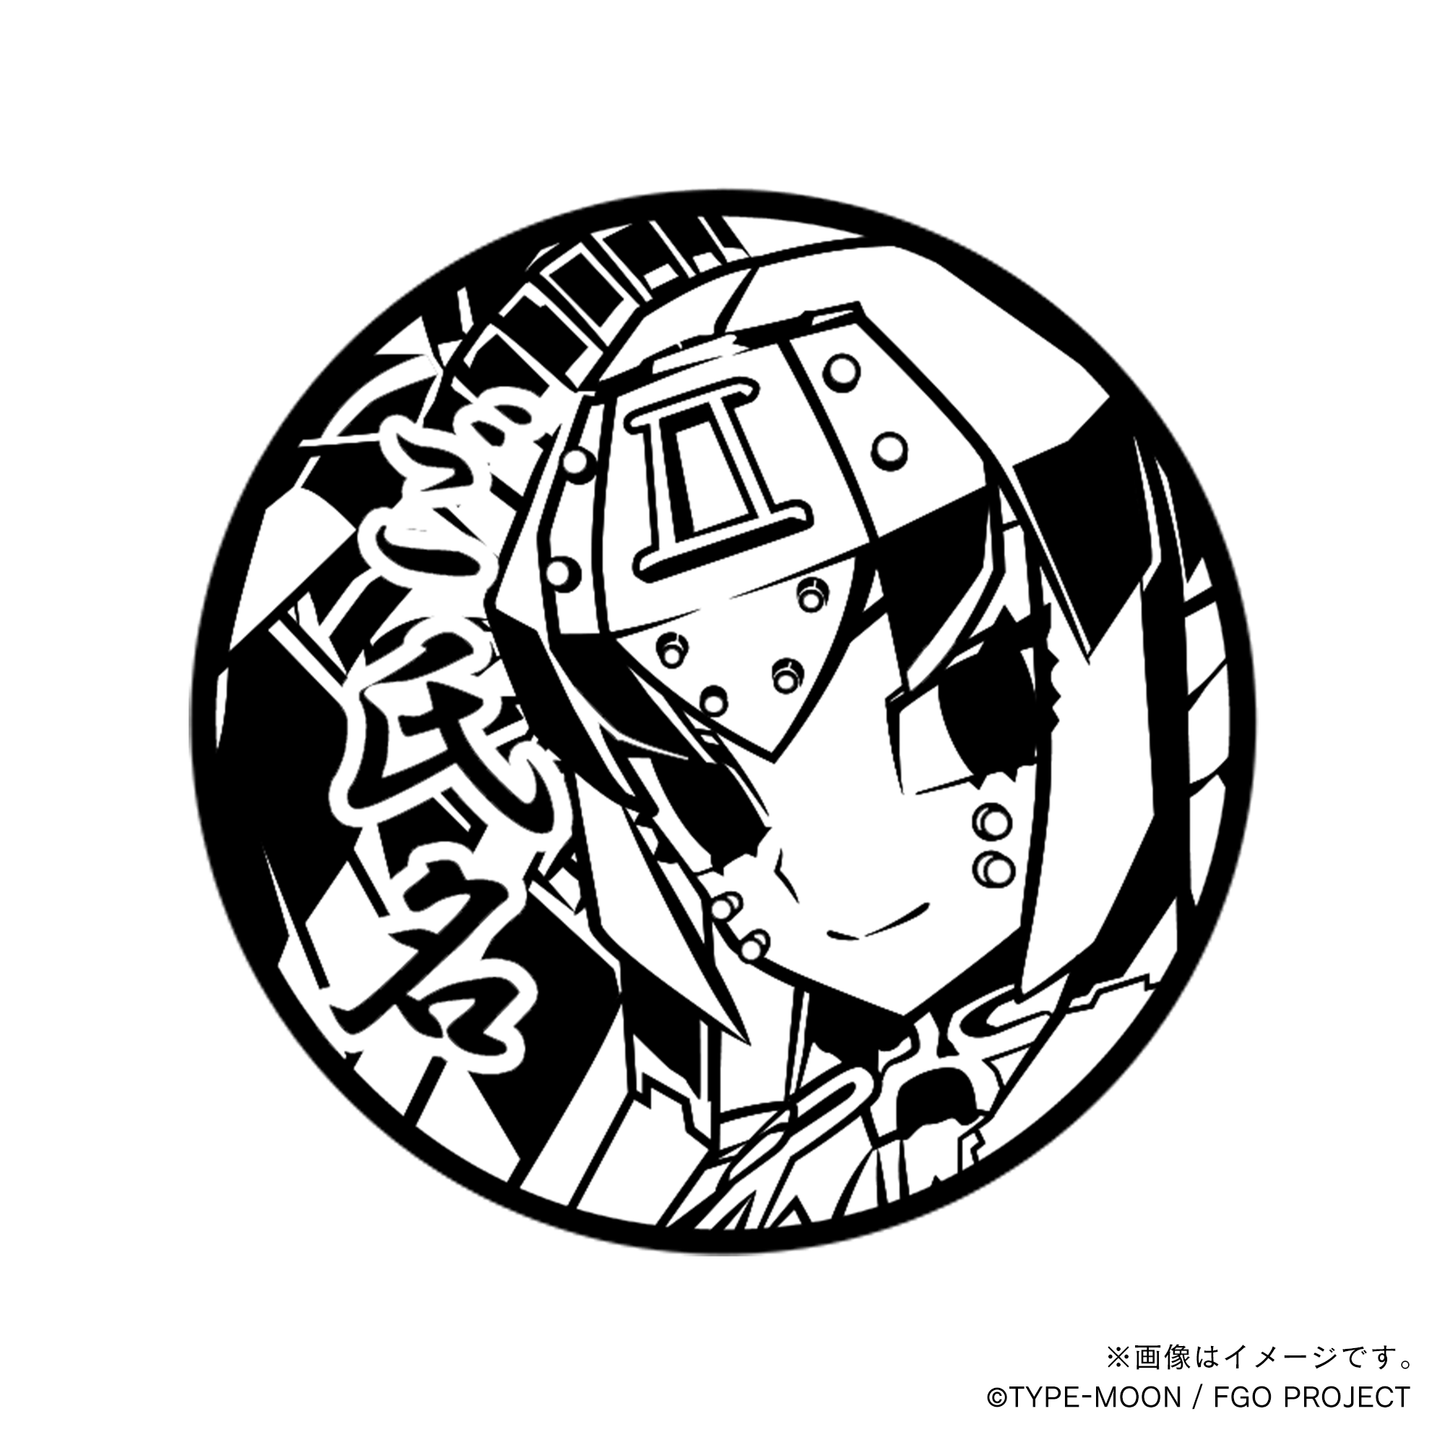 【Fate Grand Order】メカエリチャンⅡ号機・丸印18mm_alt